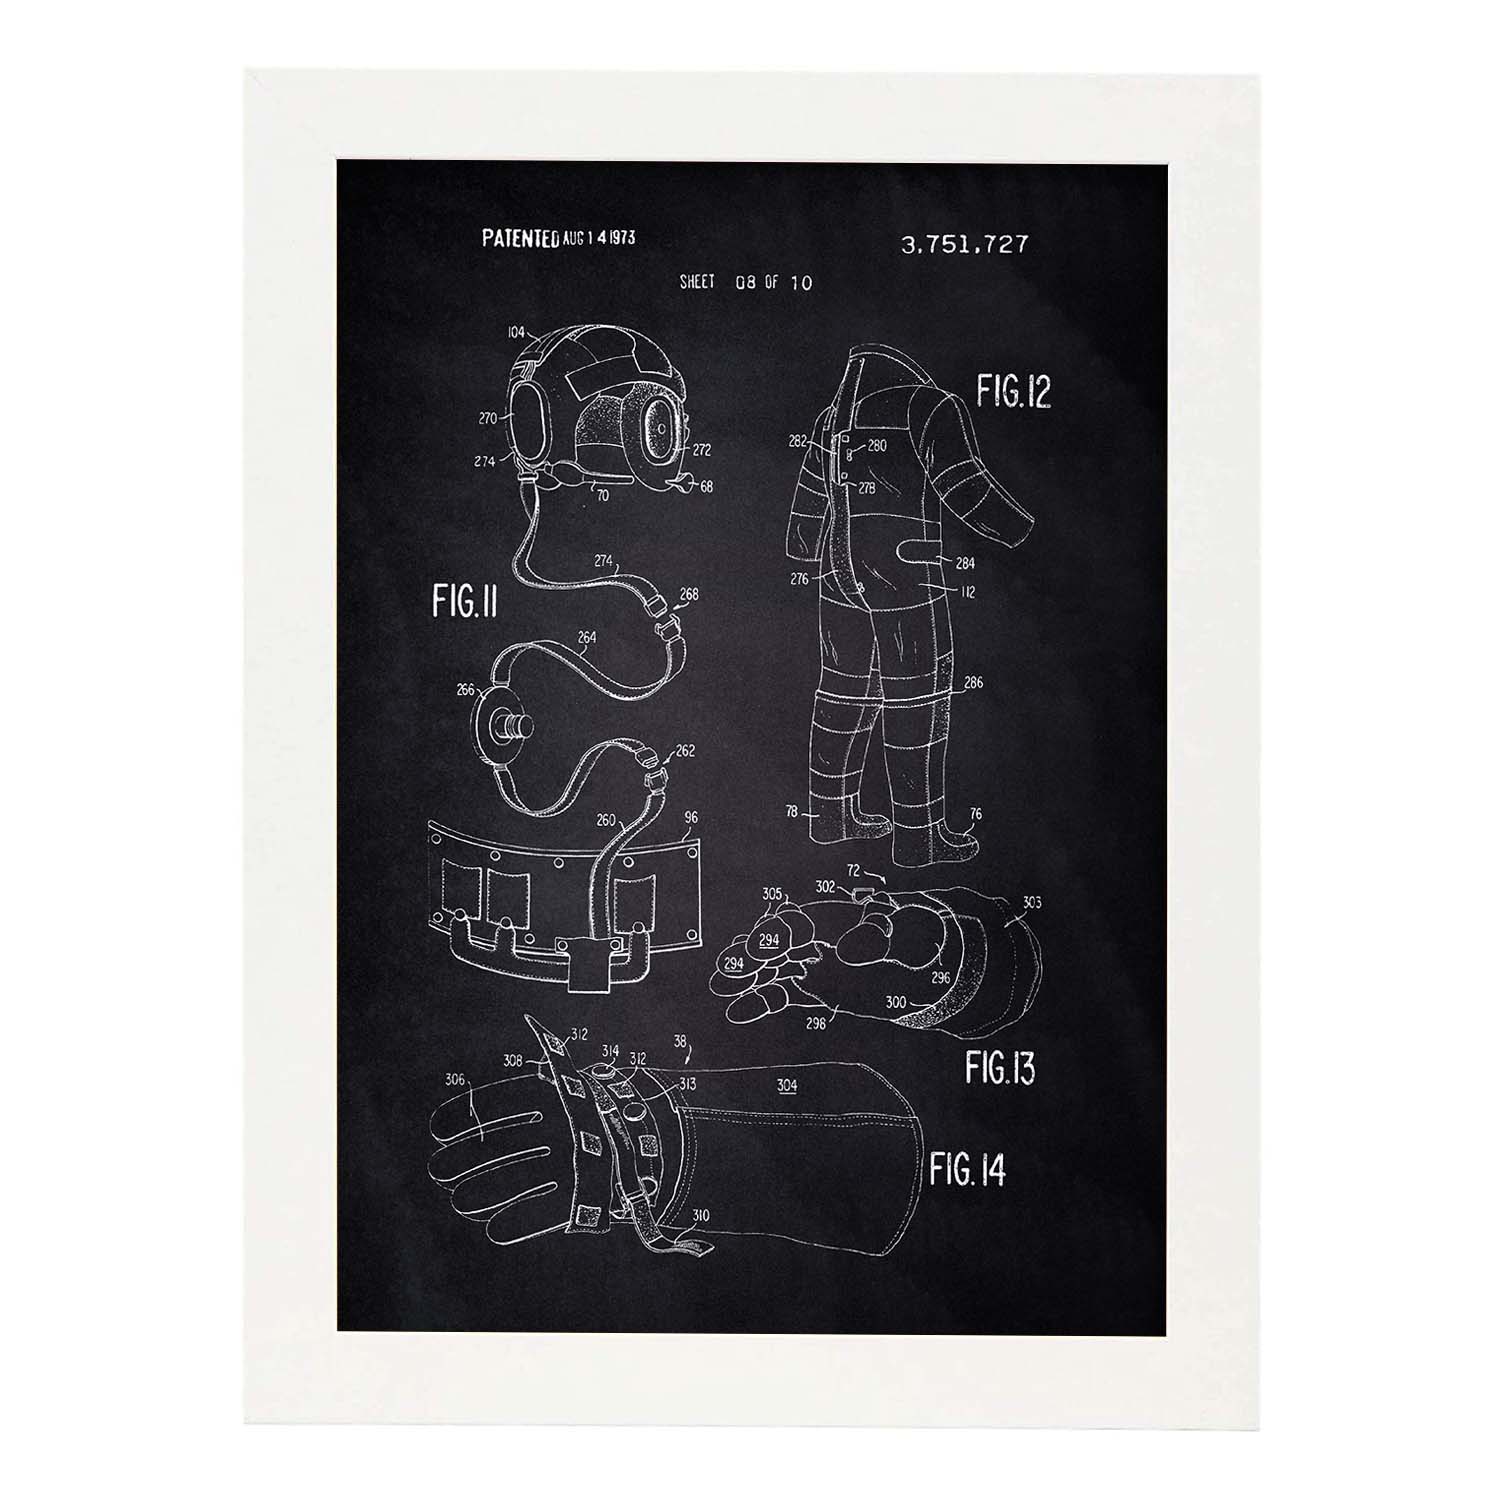 Poster con patente de Ropa astronauta 2. Lámina con diseño de patente antigua-Artwork-Nacnic-A3-Marco Blanco-Nacnic Estudio SL